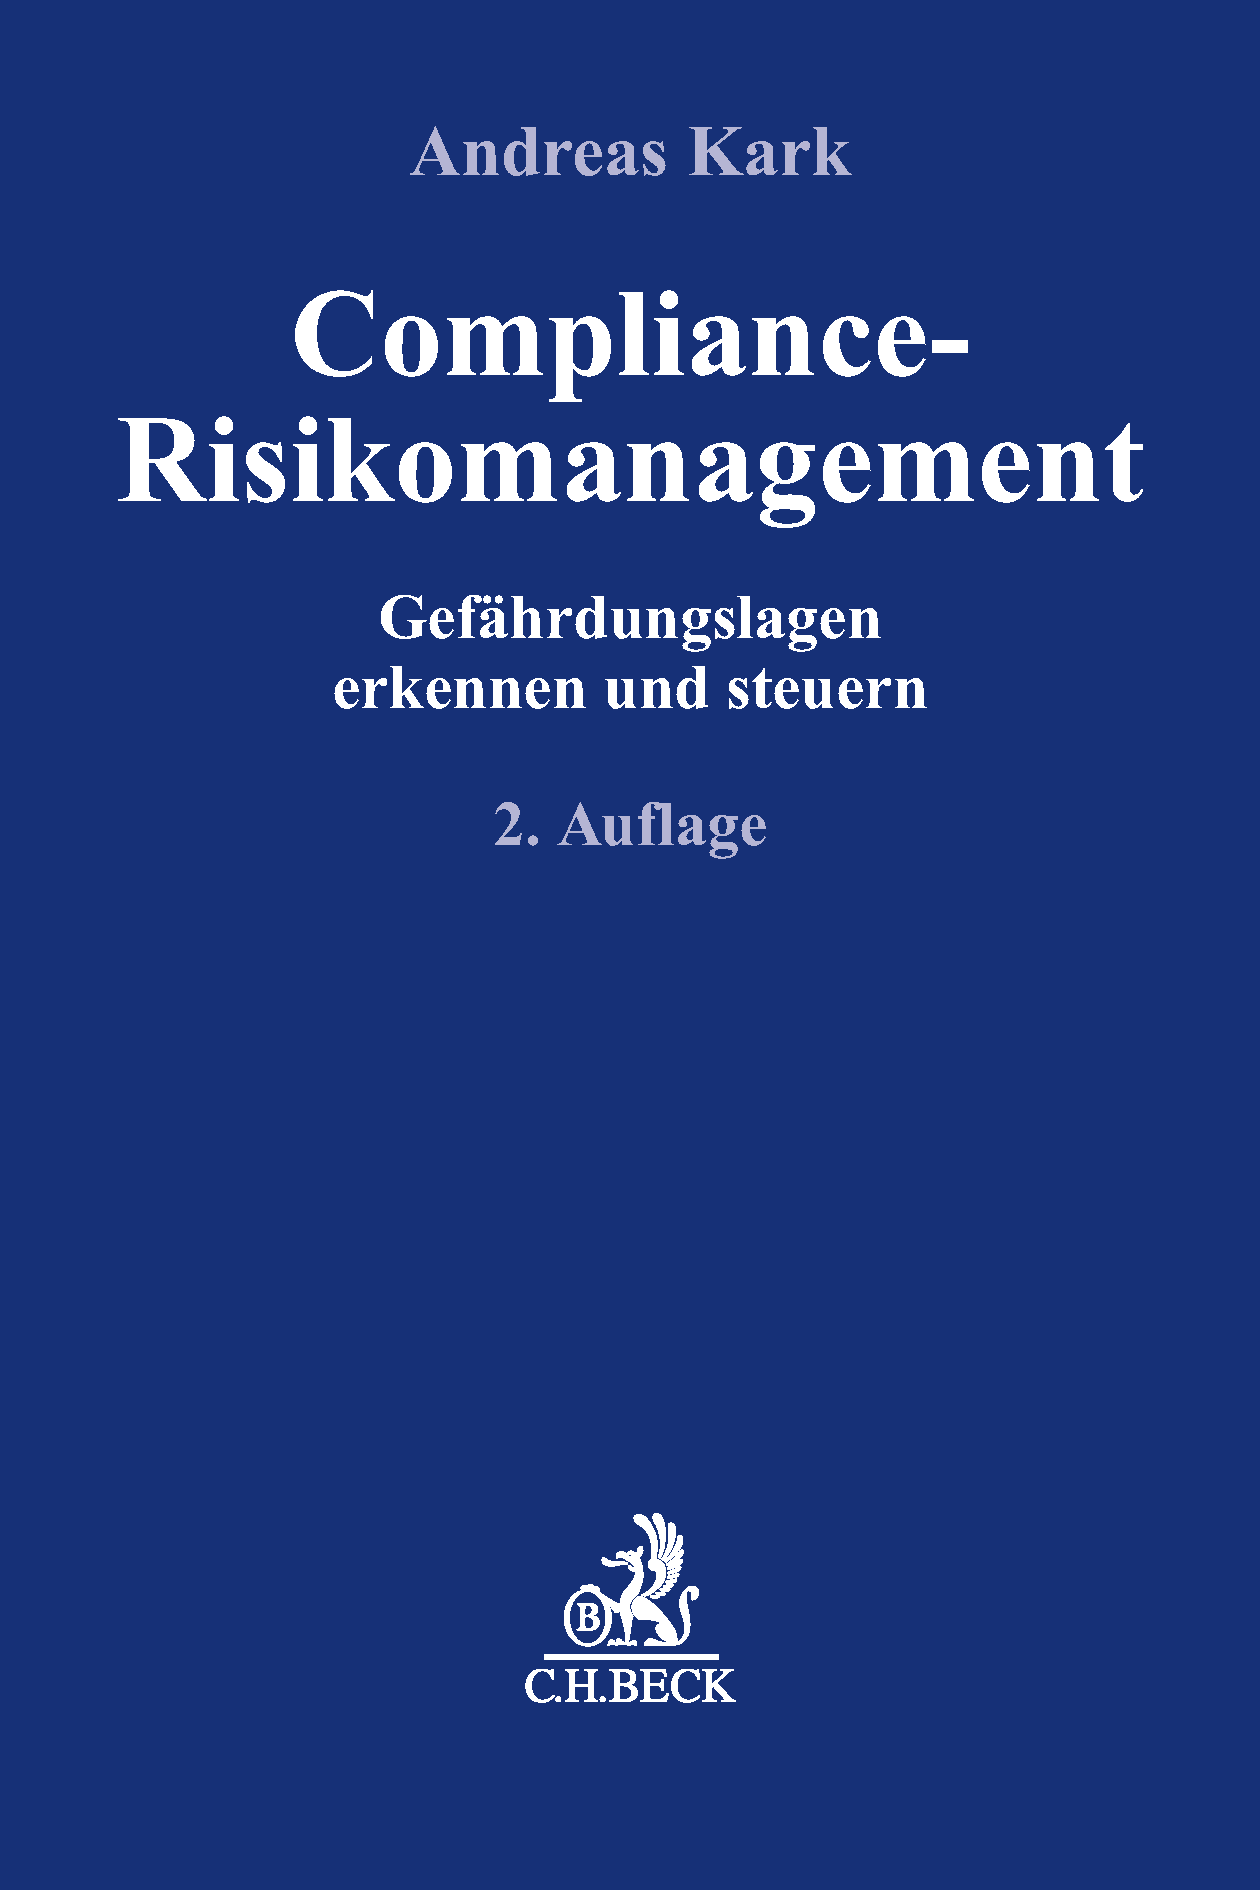 Compliance-Risikomanagement, Dr. Andreas Kark, LL.M., 2. Aufl. 2019, Verlag C.H. Beck